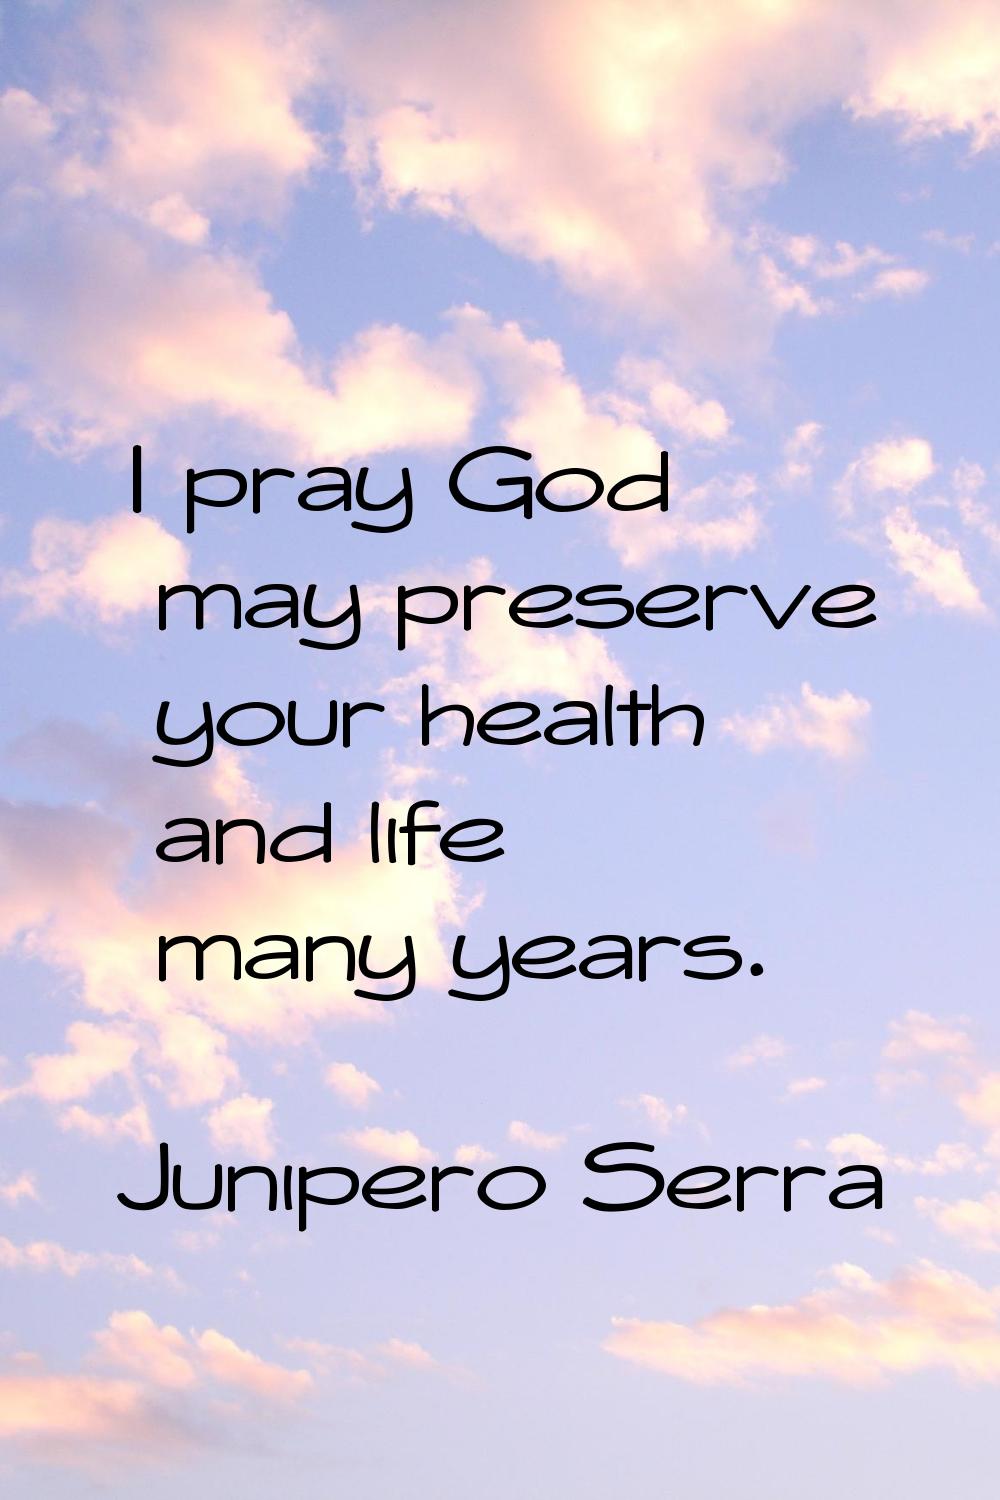 I pray God may preserve your health and life many years.